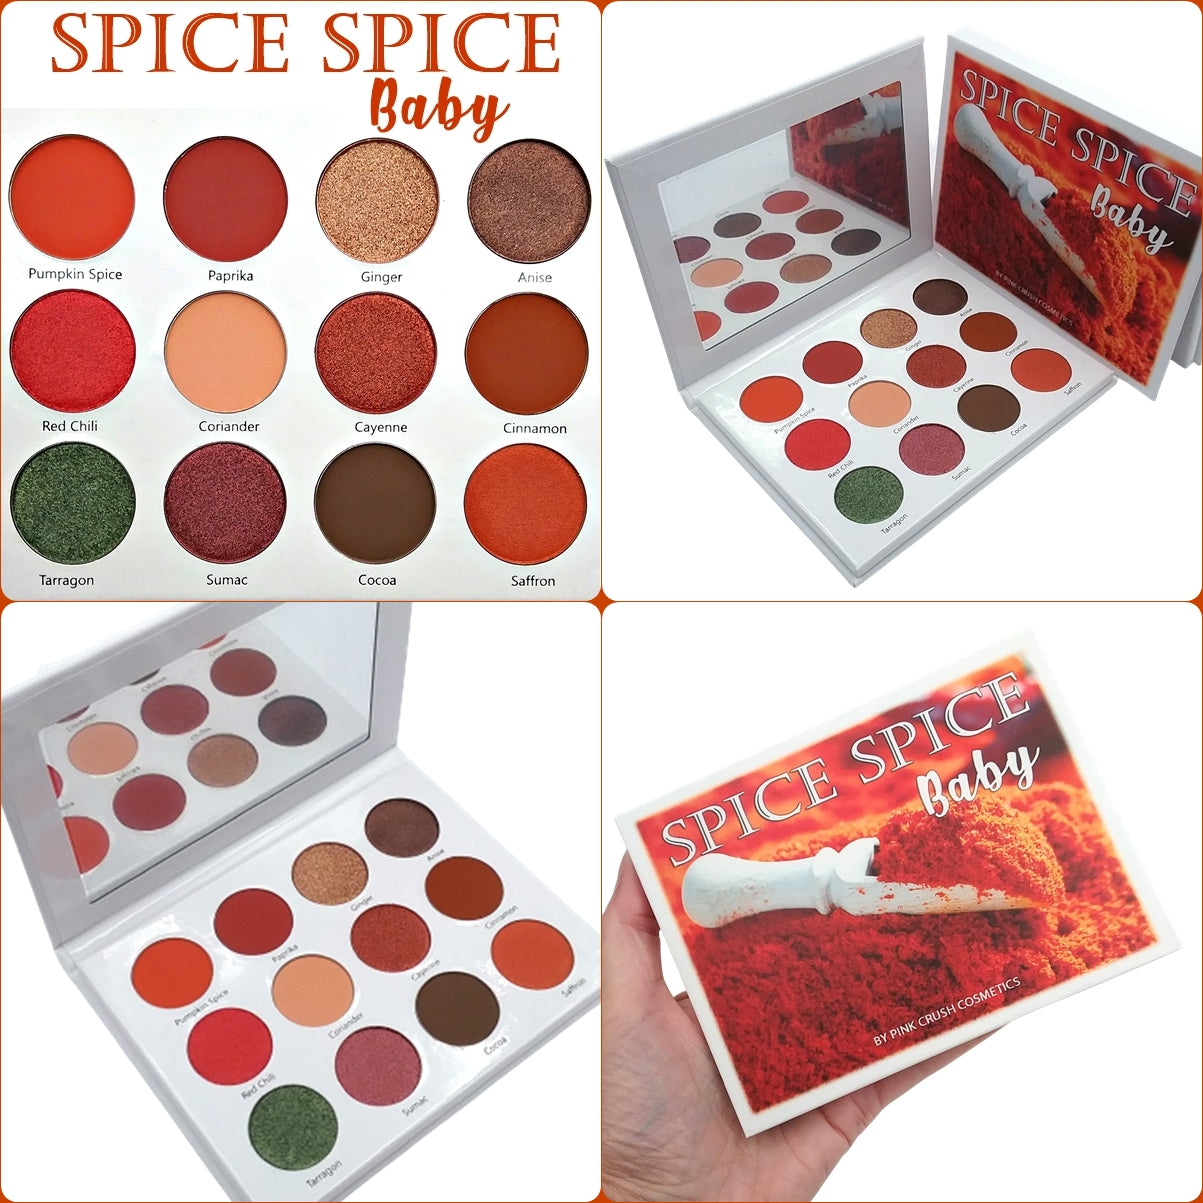 PCC Spice Spice Baby